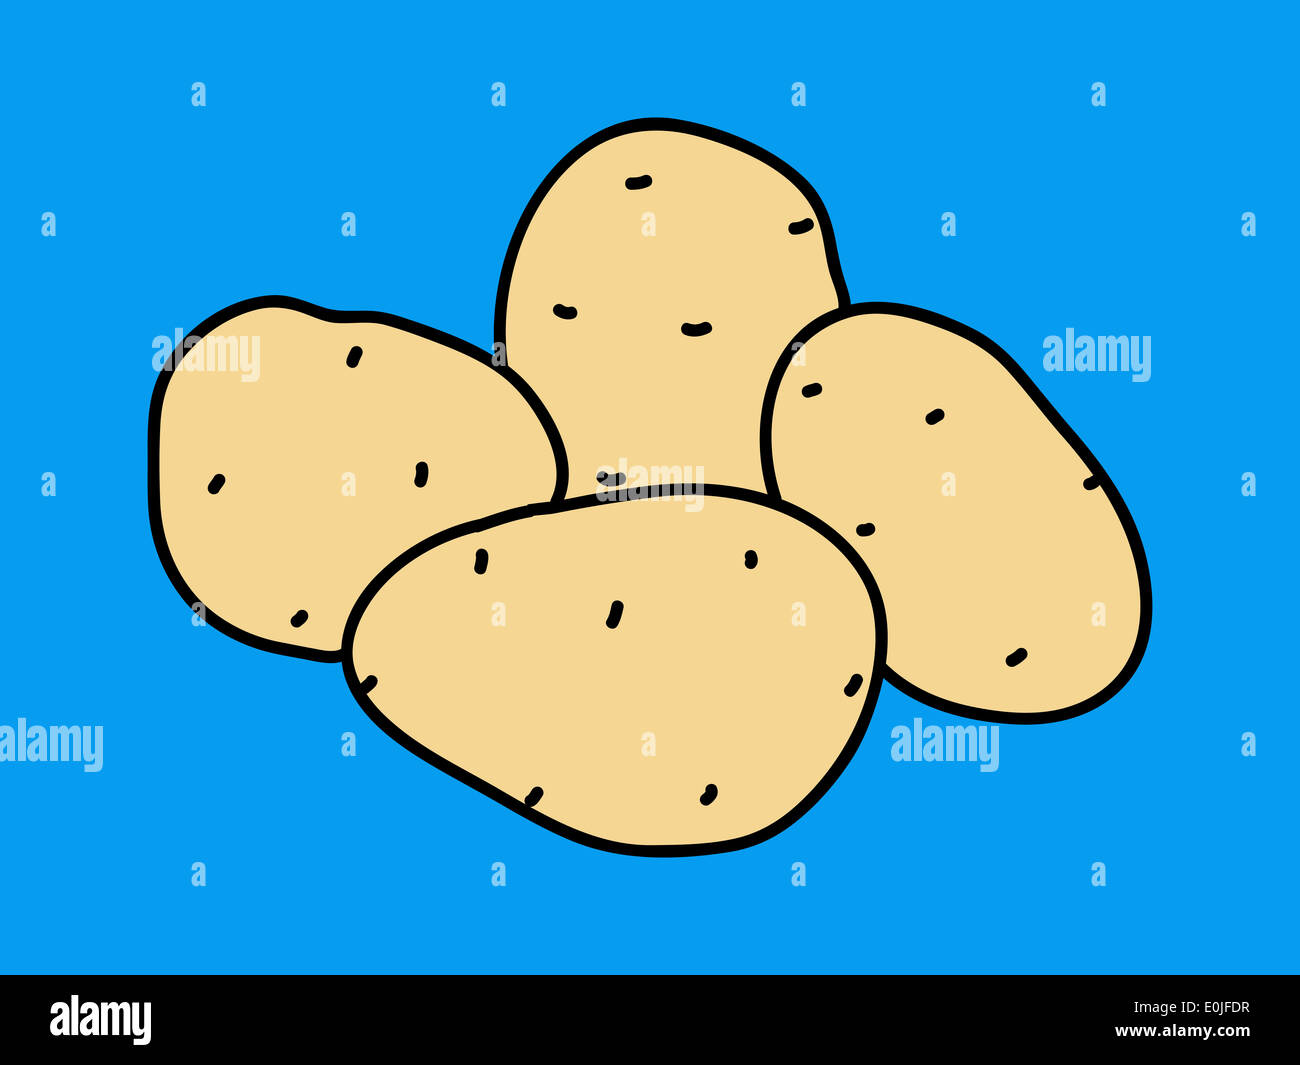 Potatoes illustration Stock Photo